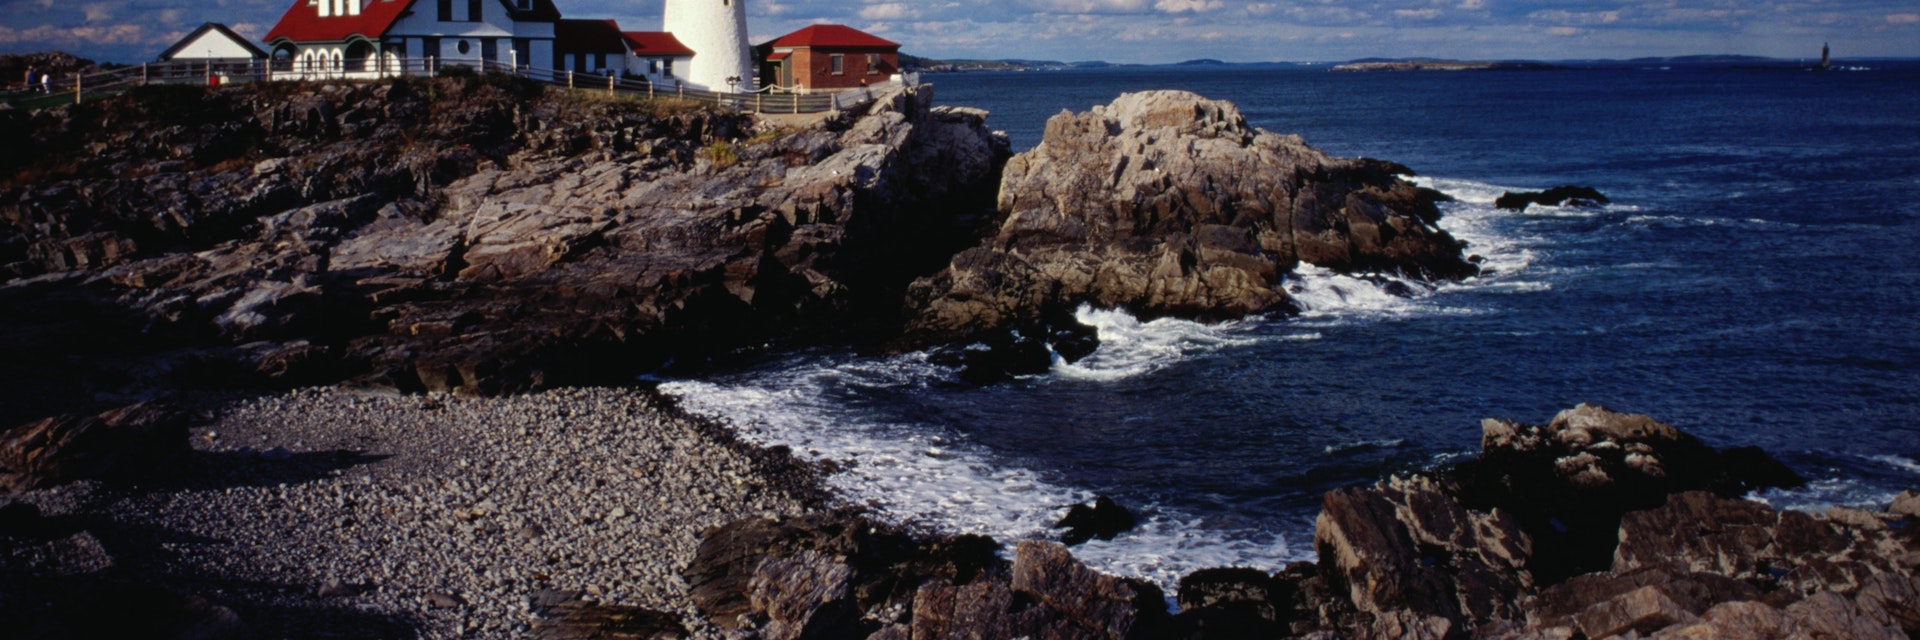 Portland Head Lighthouse on Cape Elizabeth.